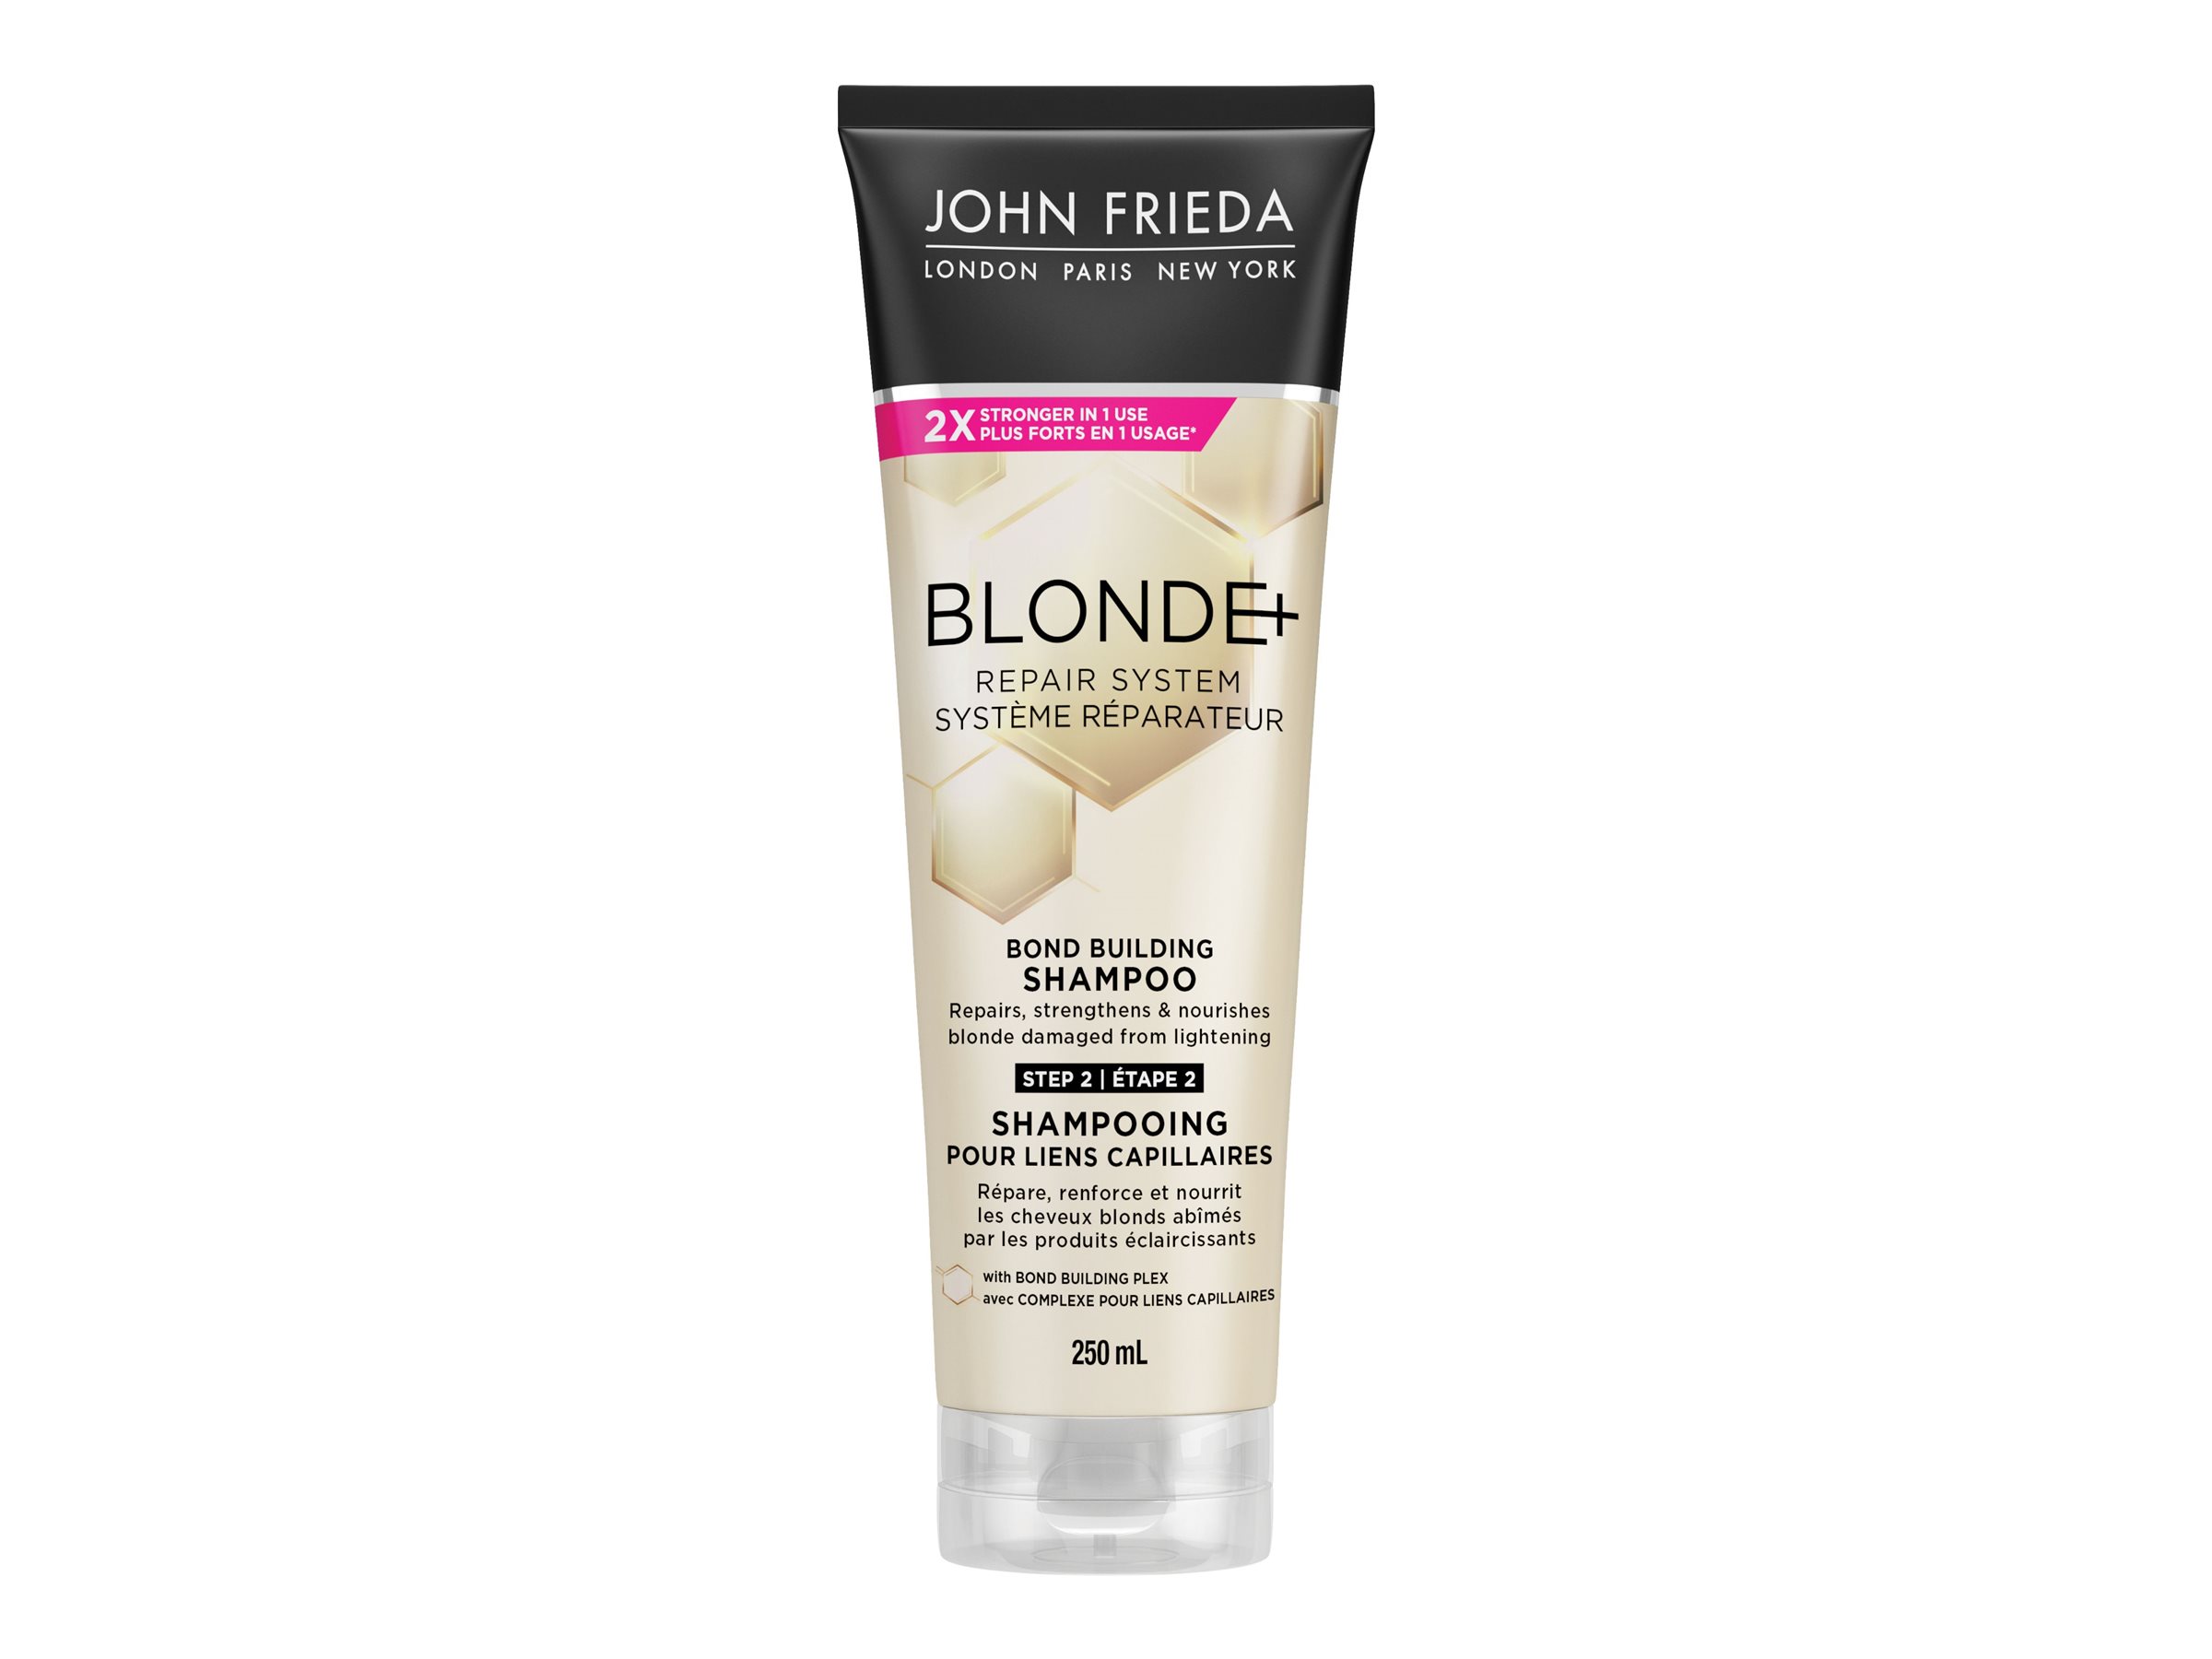 John Frieda Blonde+ Repair System Step 2 Bond Building Shampoo - 250ml